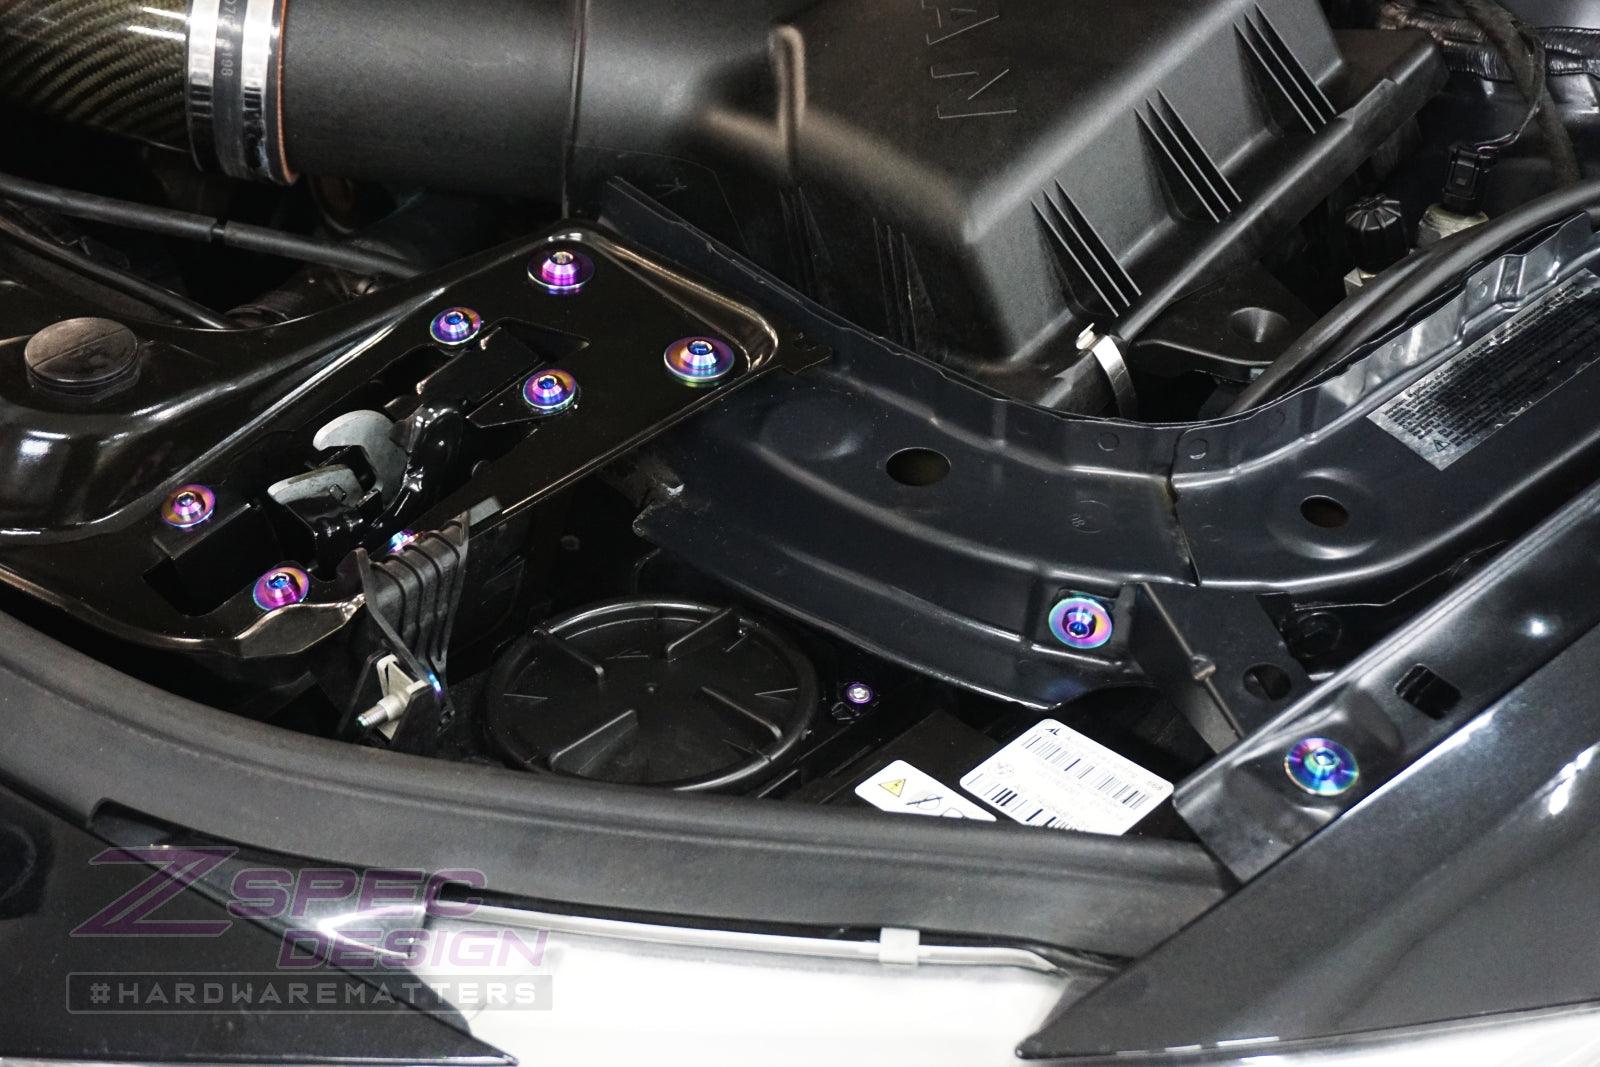 ZSPEC "Stage 2" Dress Up Bolts® Fastener Kit for '14-18 BMW 340i F34 3.0T, Titanium  Grade-5 Hardware Engine Bay Upgrade Performance Car Show Ready Vehicle 